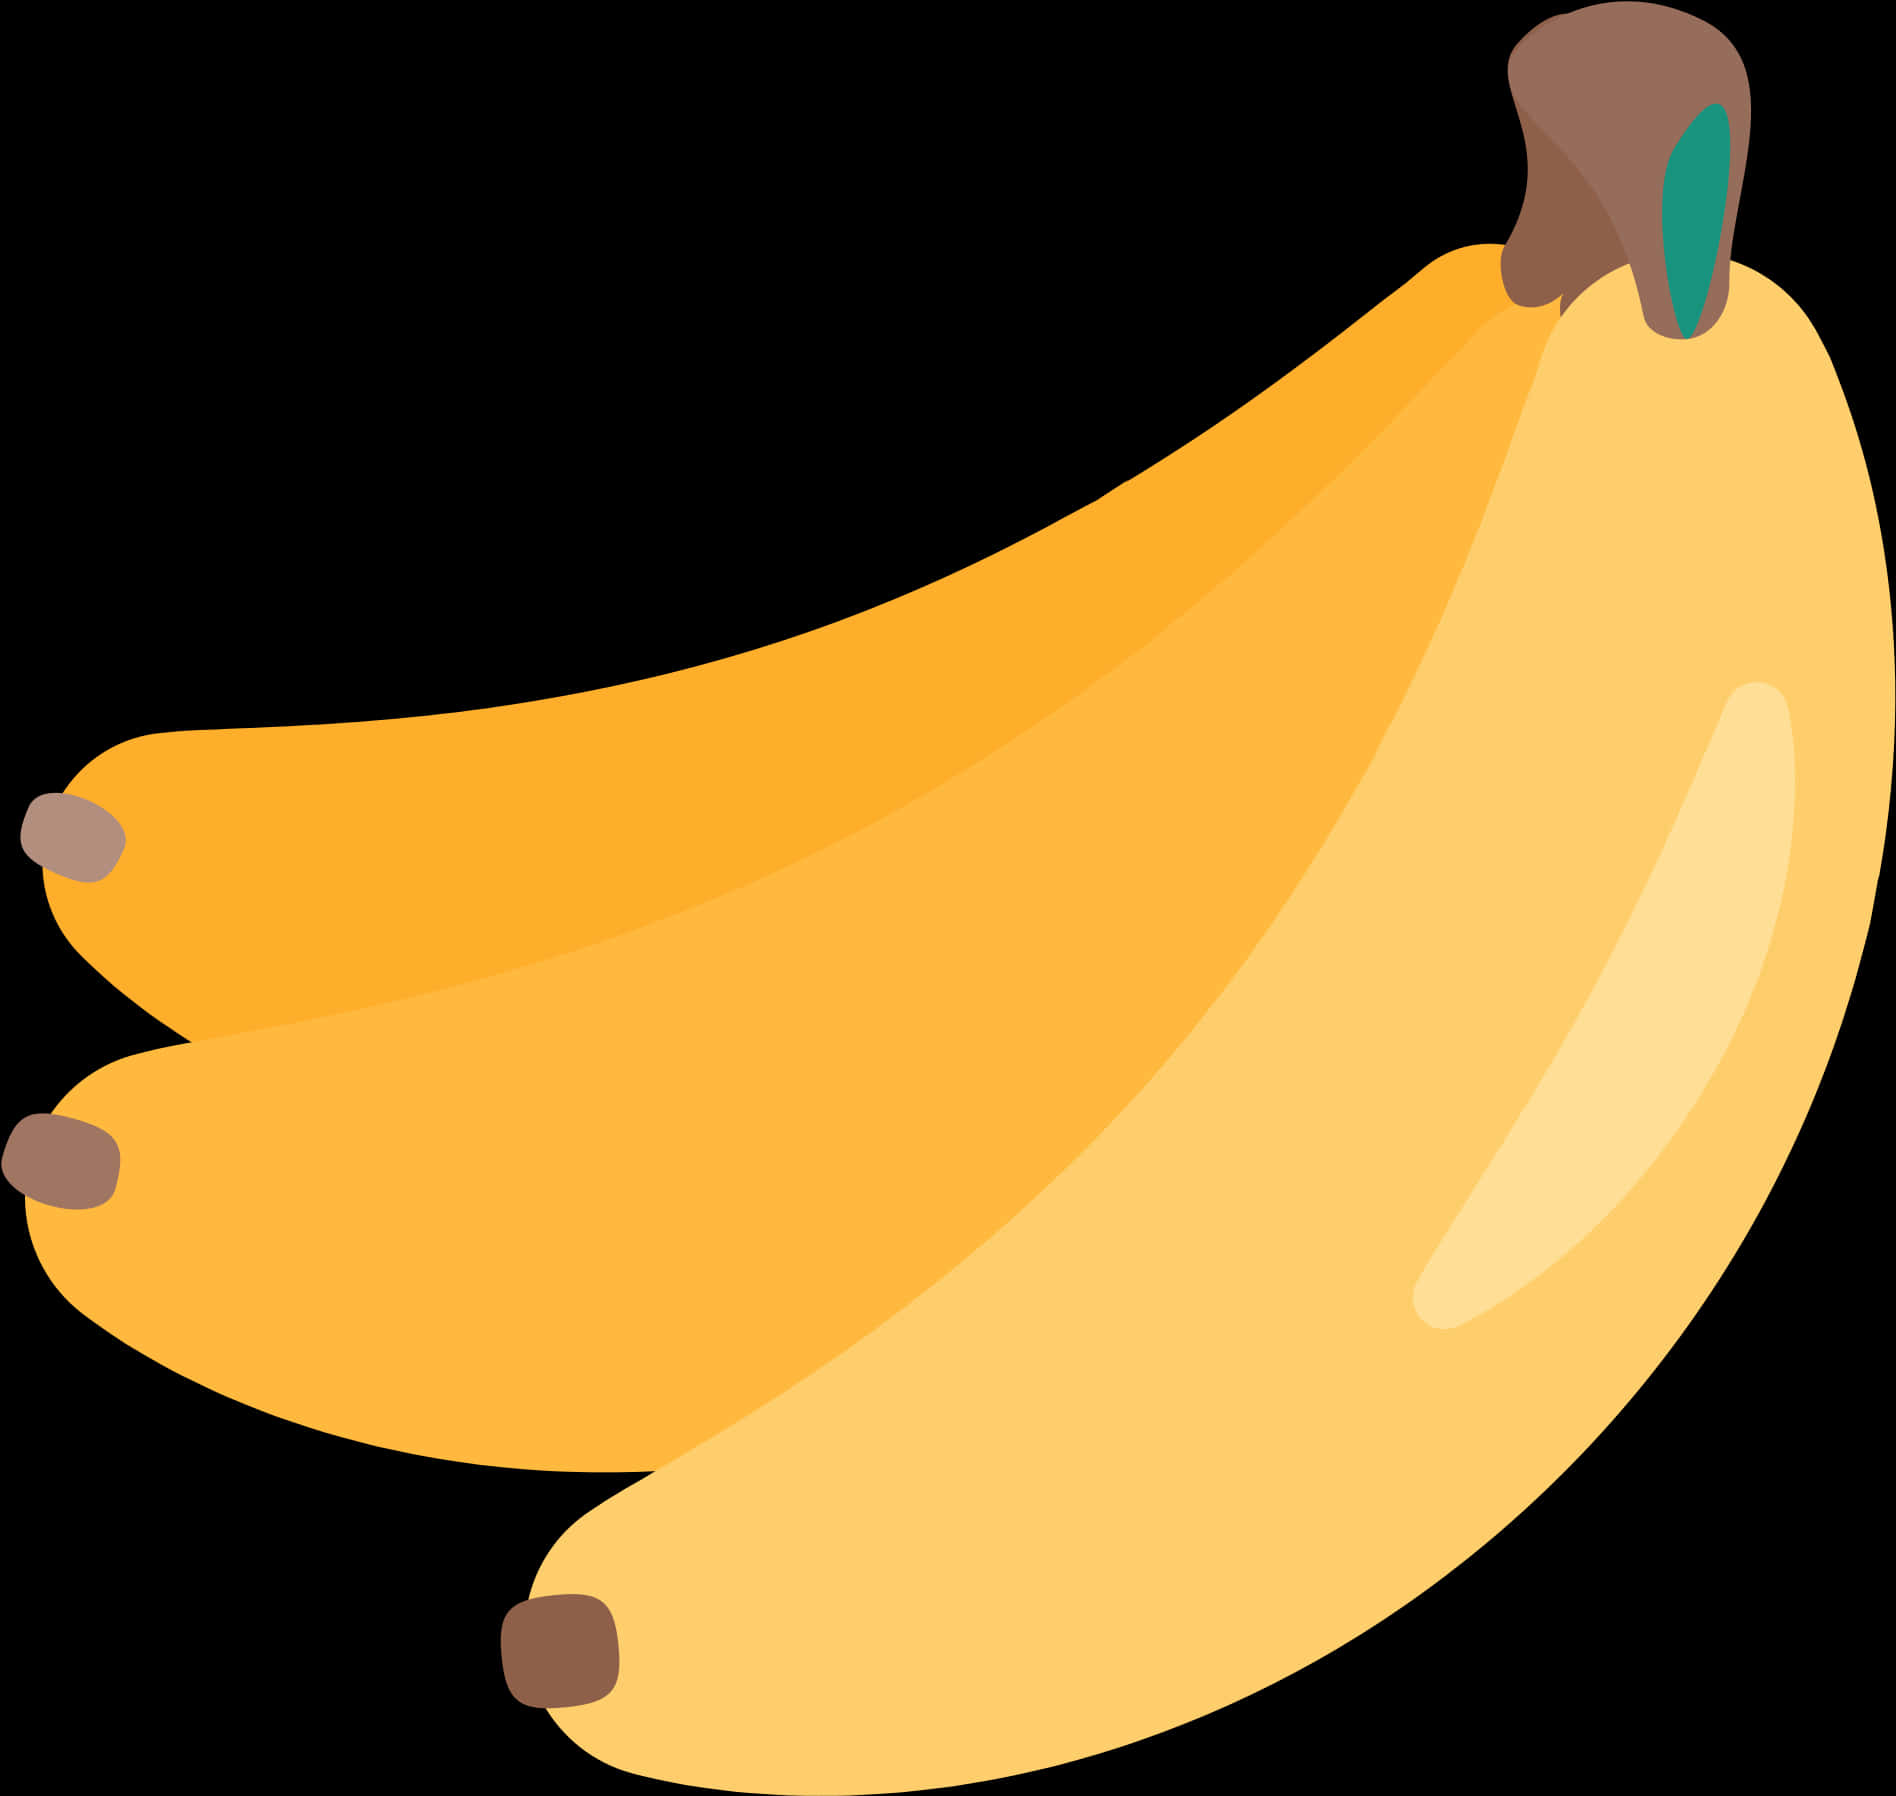 Clusterof Bananas Illustration PNG